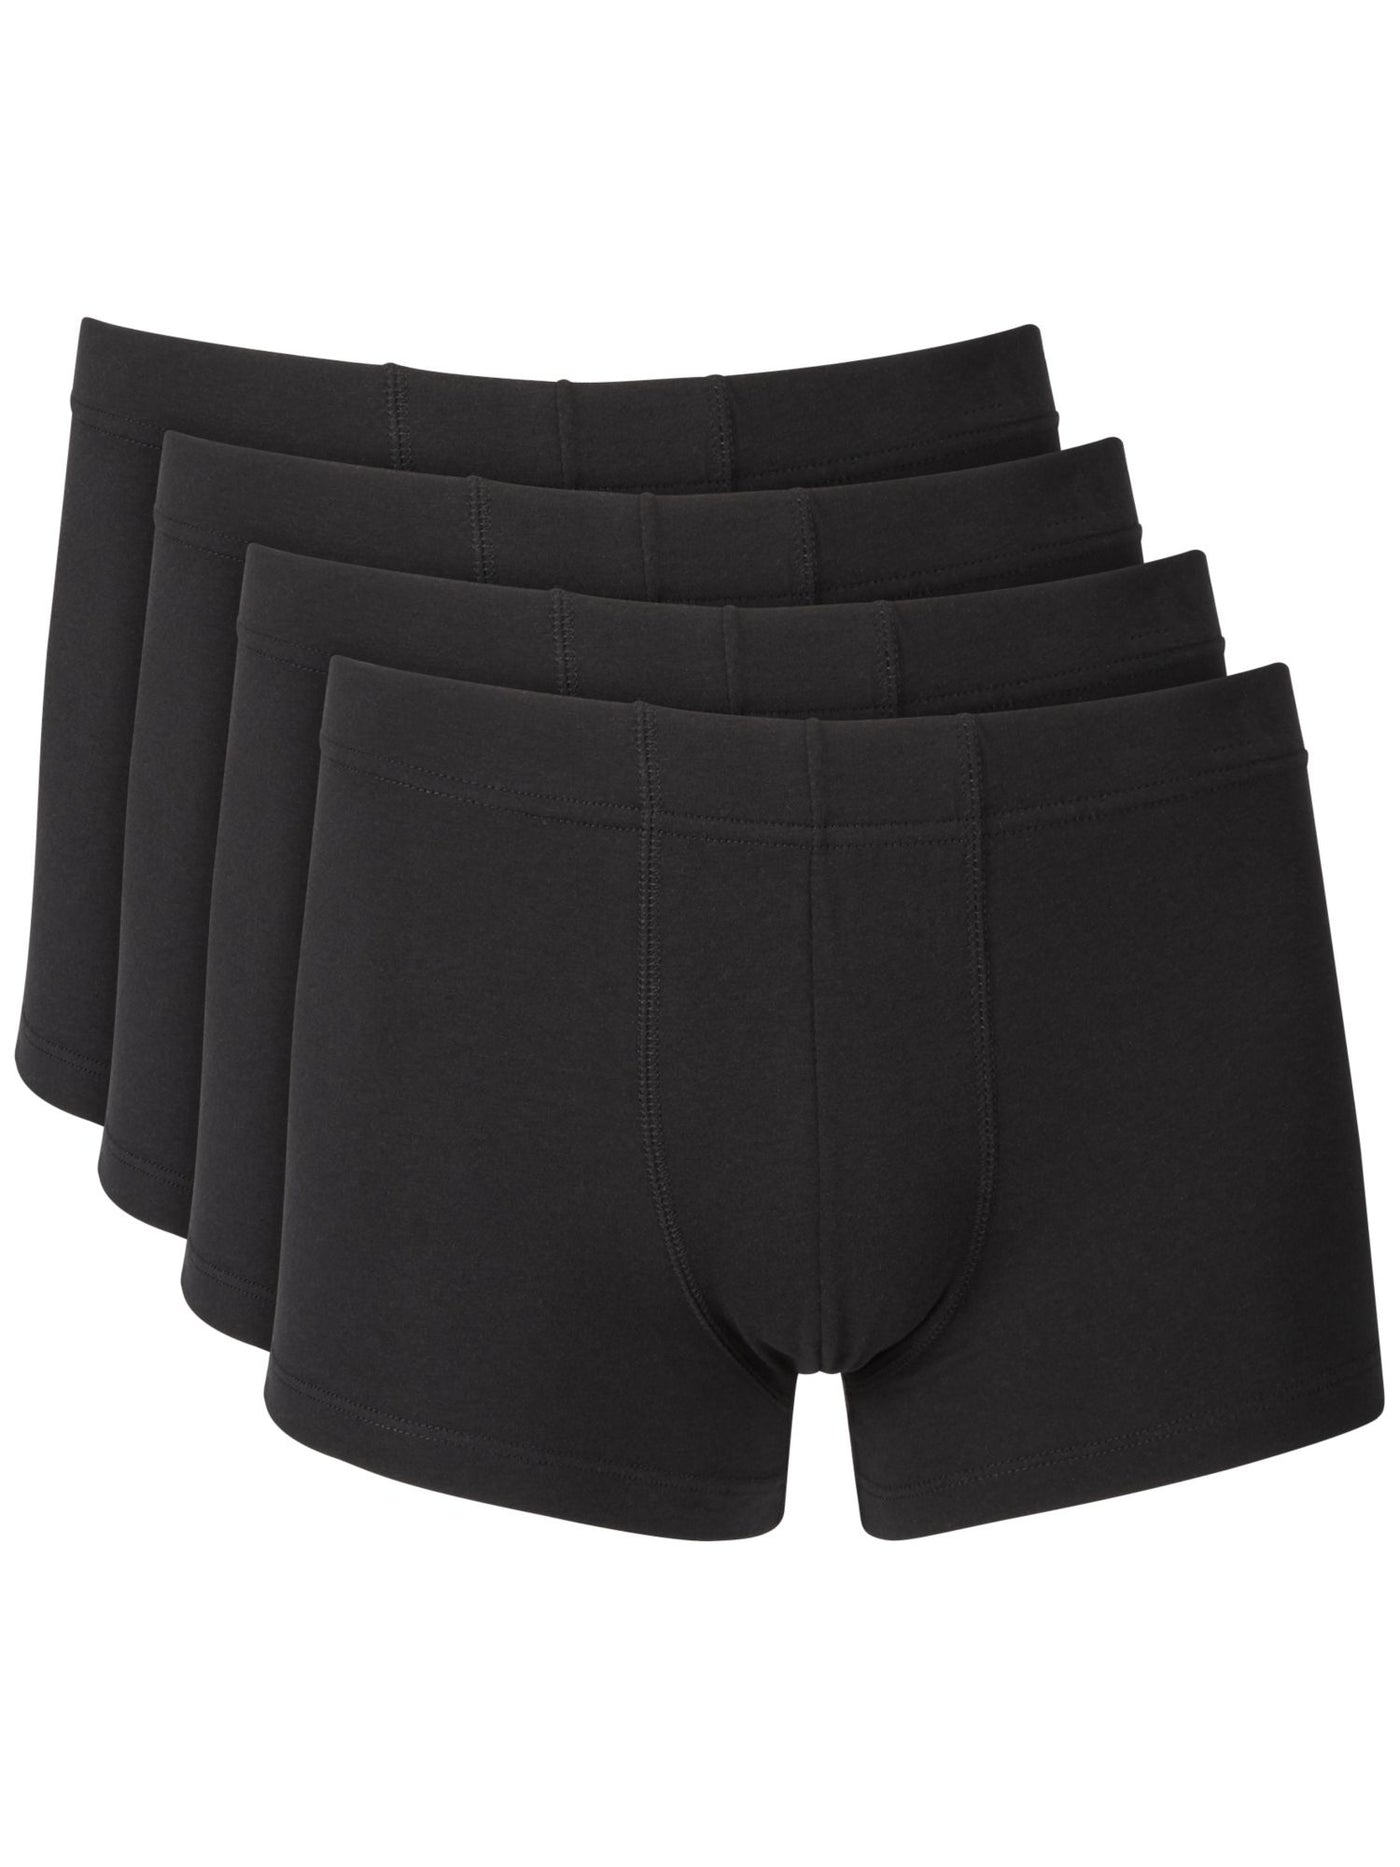 ALFANI Intimates Black Cotton Blend Boxer Brief Underwear S